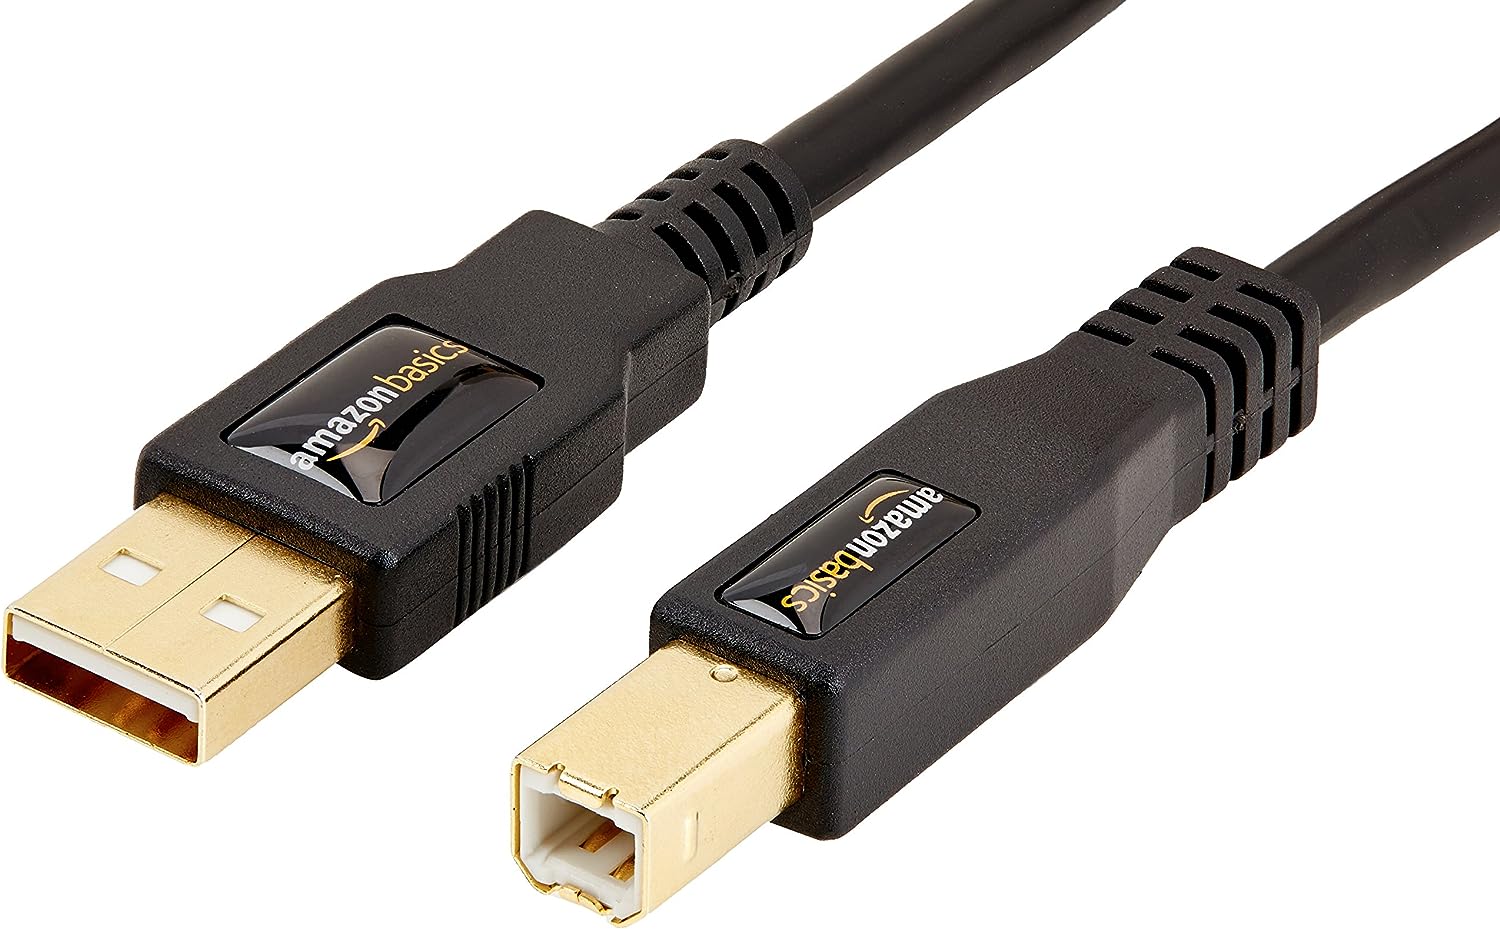 Amazon Basics USB-A to USB-B 2.0 Cable for Printer or [...]